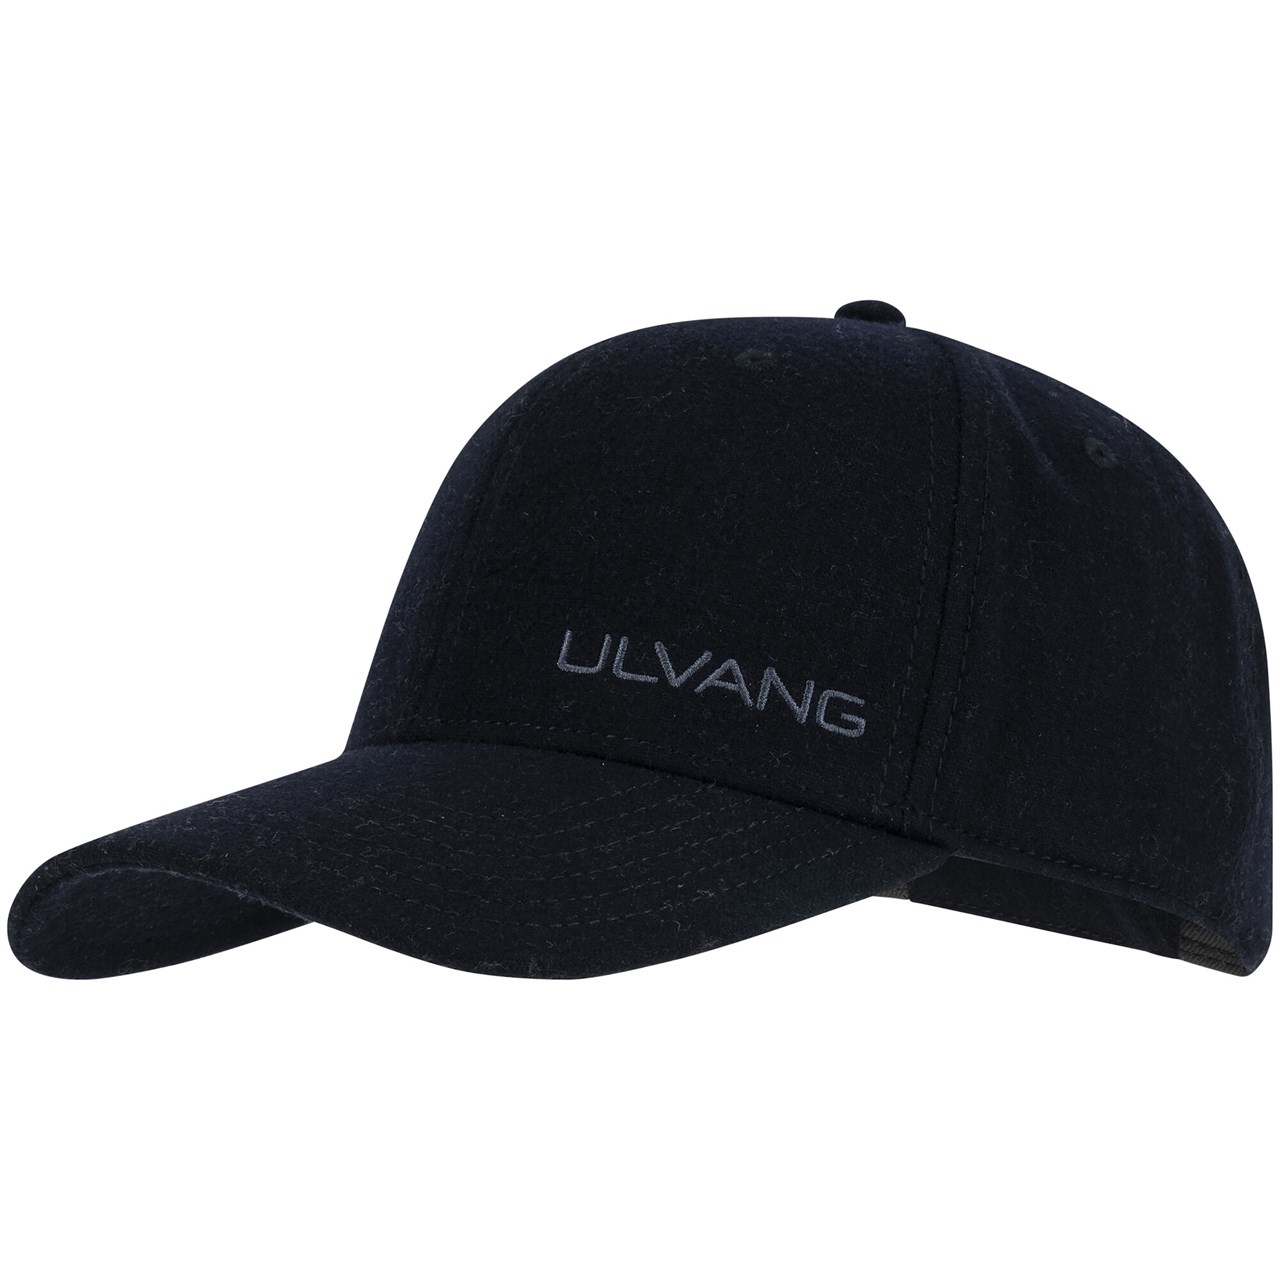 Picture of Ulvang Logo Cap - New Navy